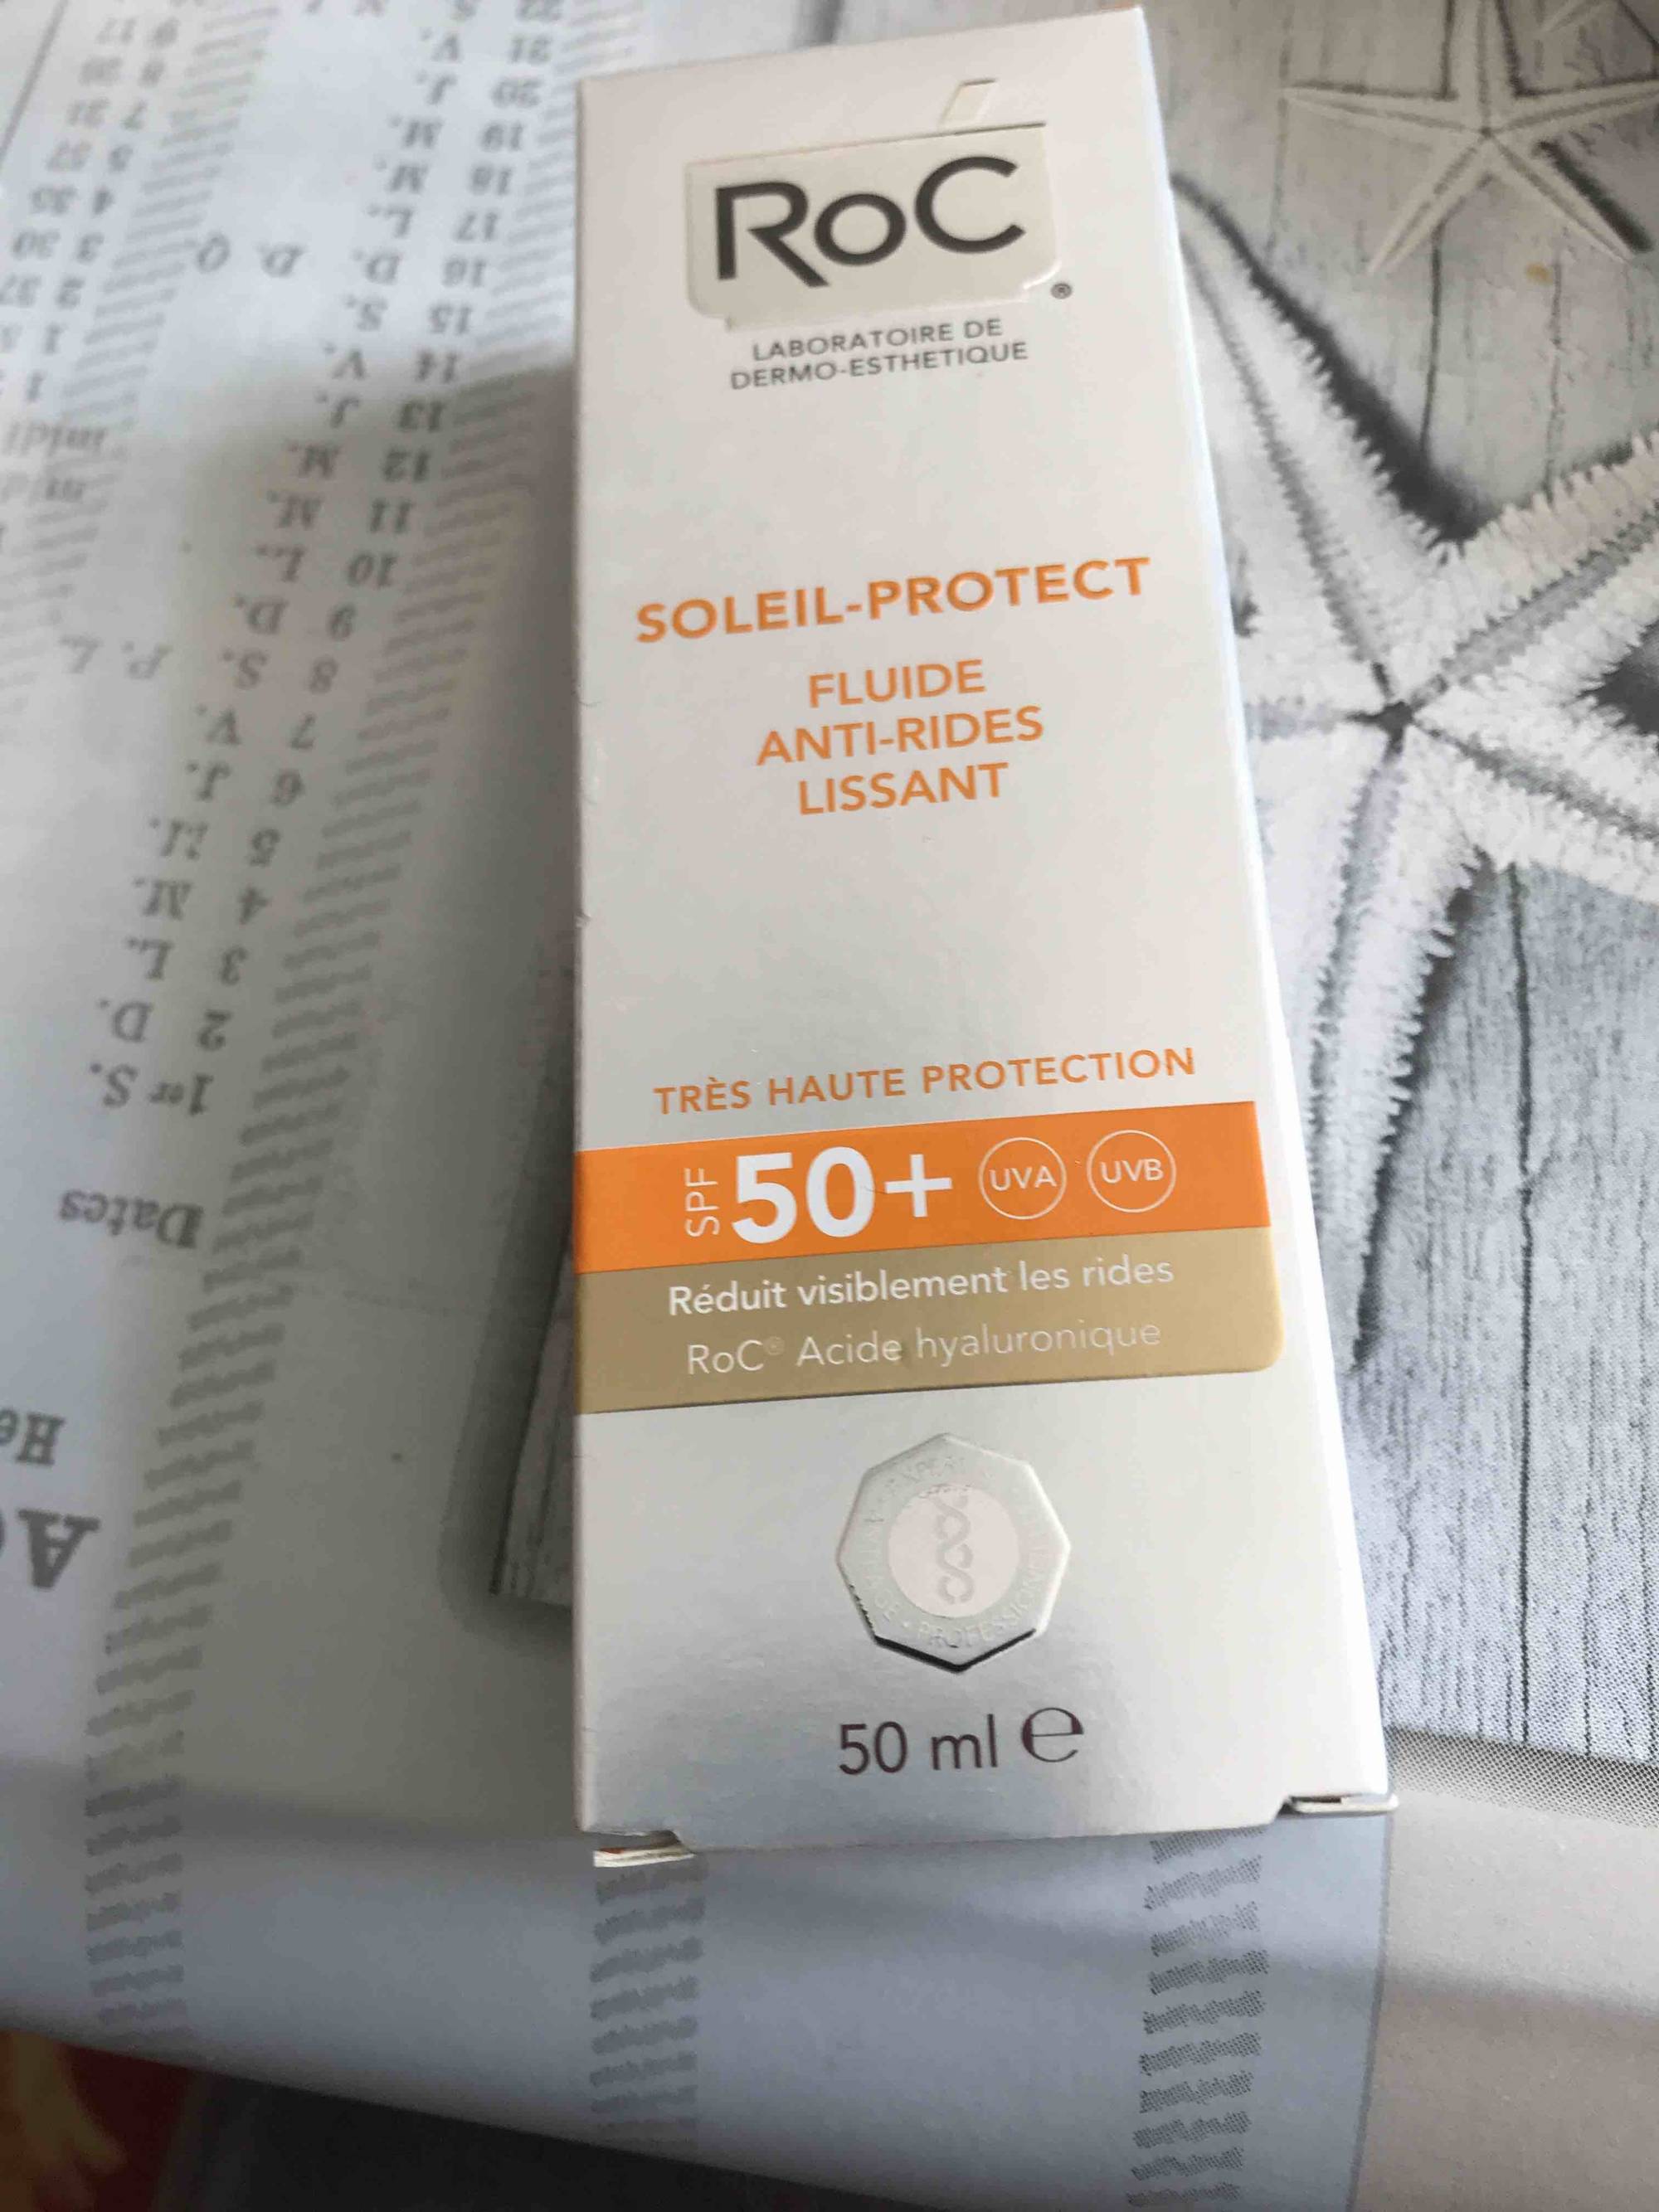 ROC - Soleil-protect - Fluide anti-rides lissant SPF 50+ 